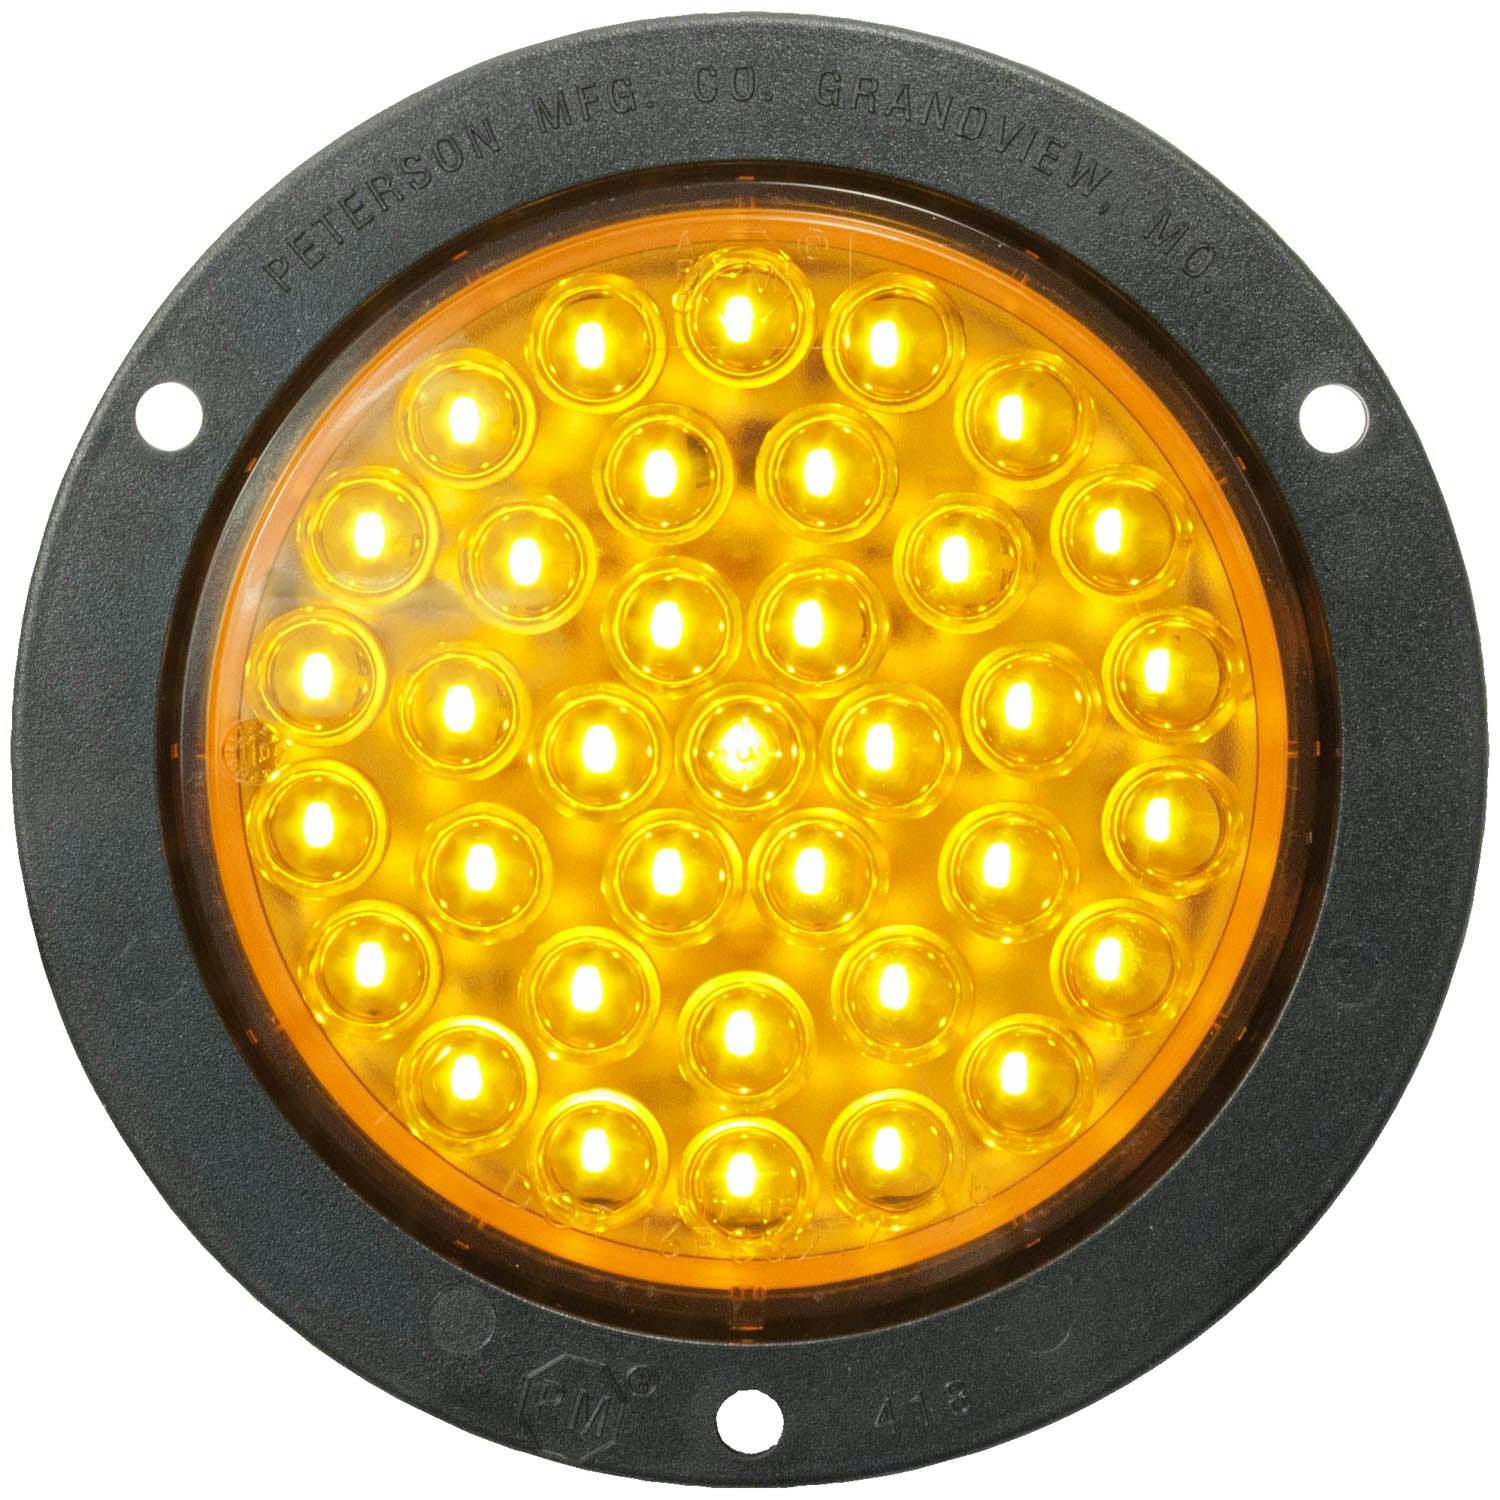 Piranha® LED 4" Round Amber Rear Turn Signal Light, amber, 36 Diode, Flange Mount, W/ Hardwired PL3 Adapter Plug,, mfg pk (Pack of 50) - 818TA-lit